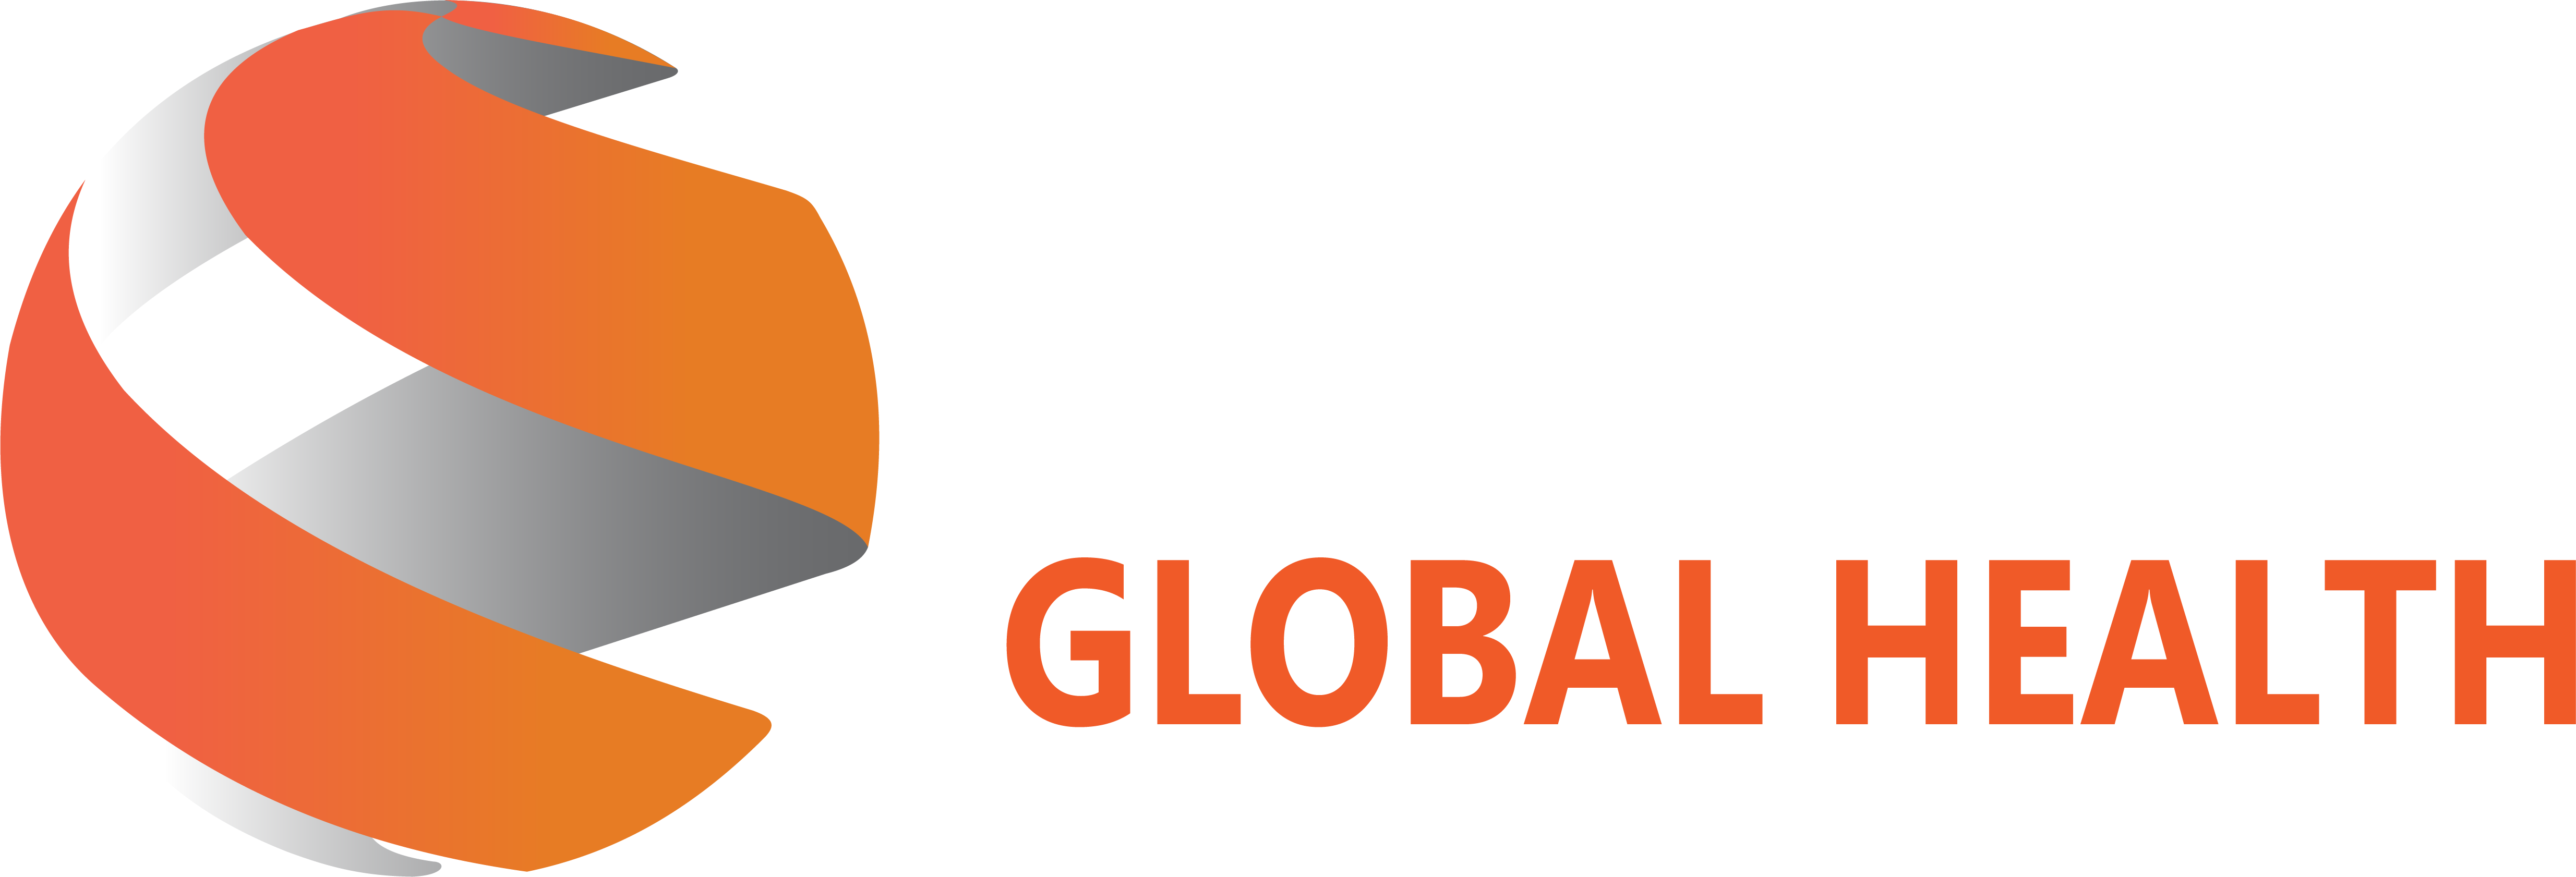 Transform Global Health